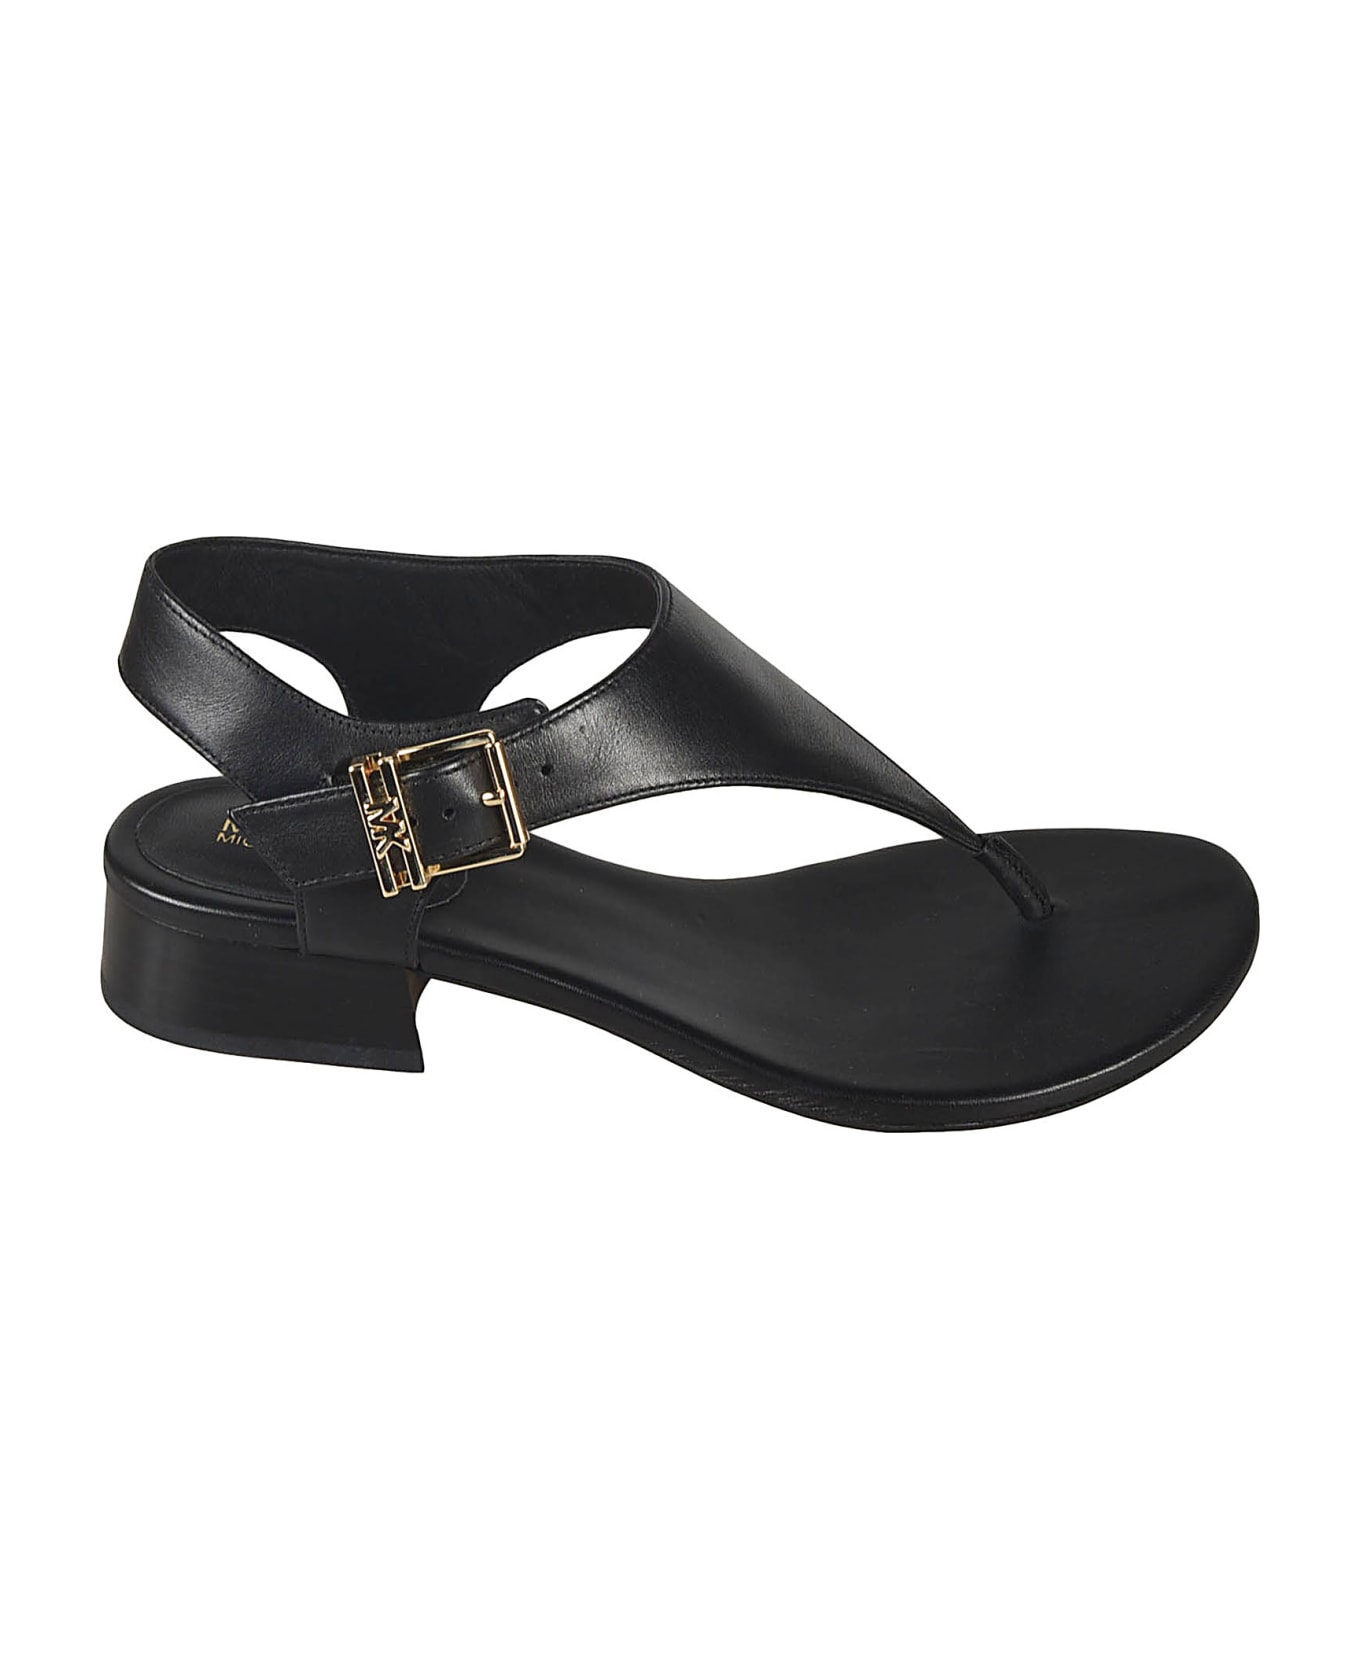 Michael Kors Robyn Flex Thong Sandals - Black